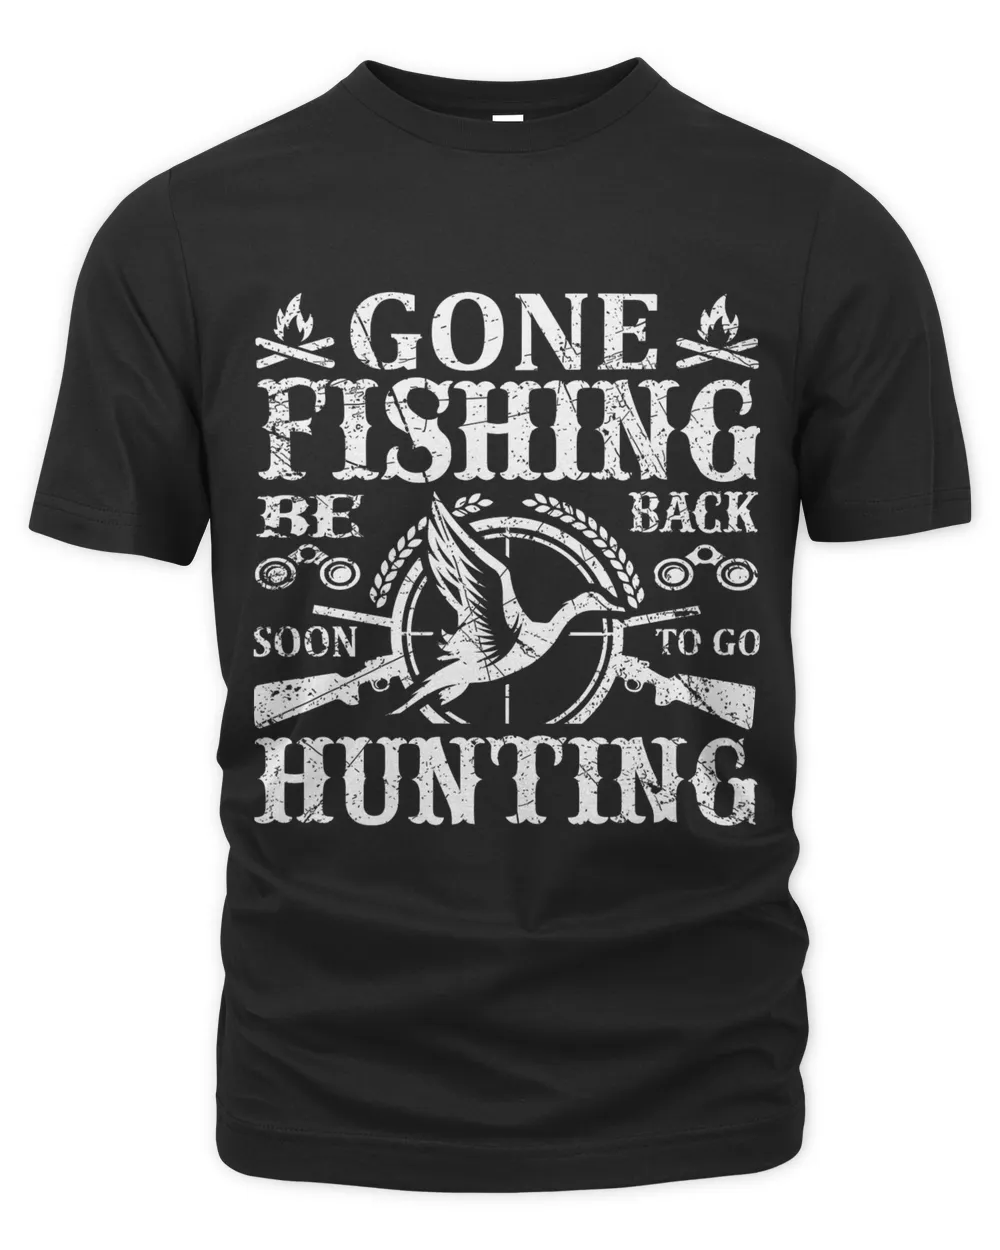 Hunting T-Shirt, Hunting Shirt for Dad, Grandfather (30)